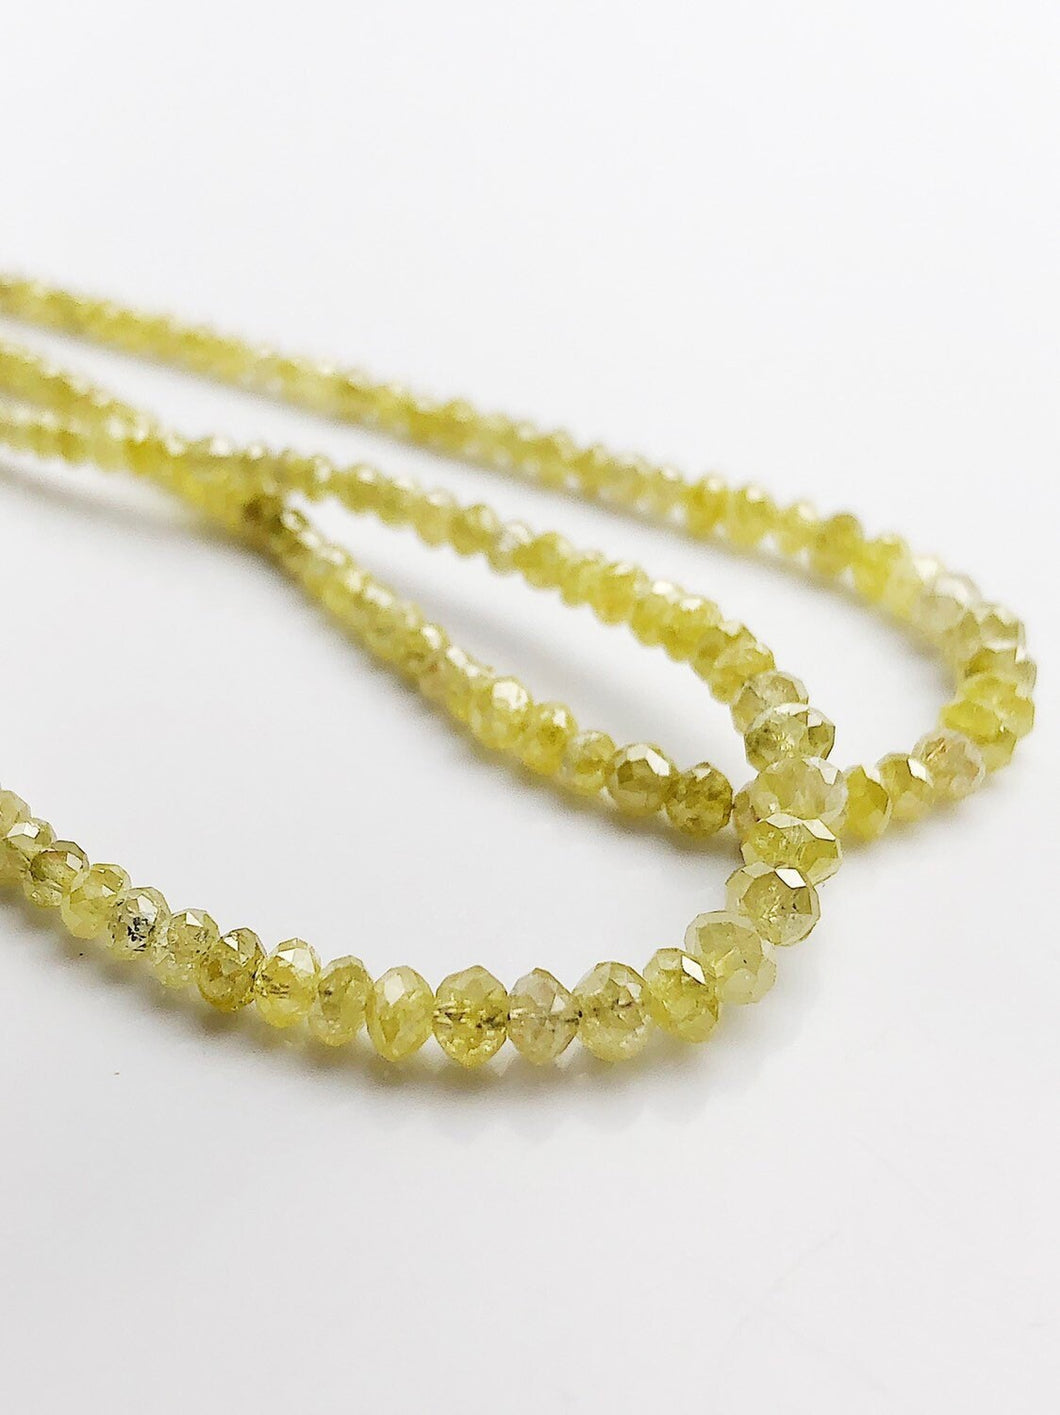 HALF OFF SALE - Natural Yellow Diamond Gemstone Beads, Full Strand, 14